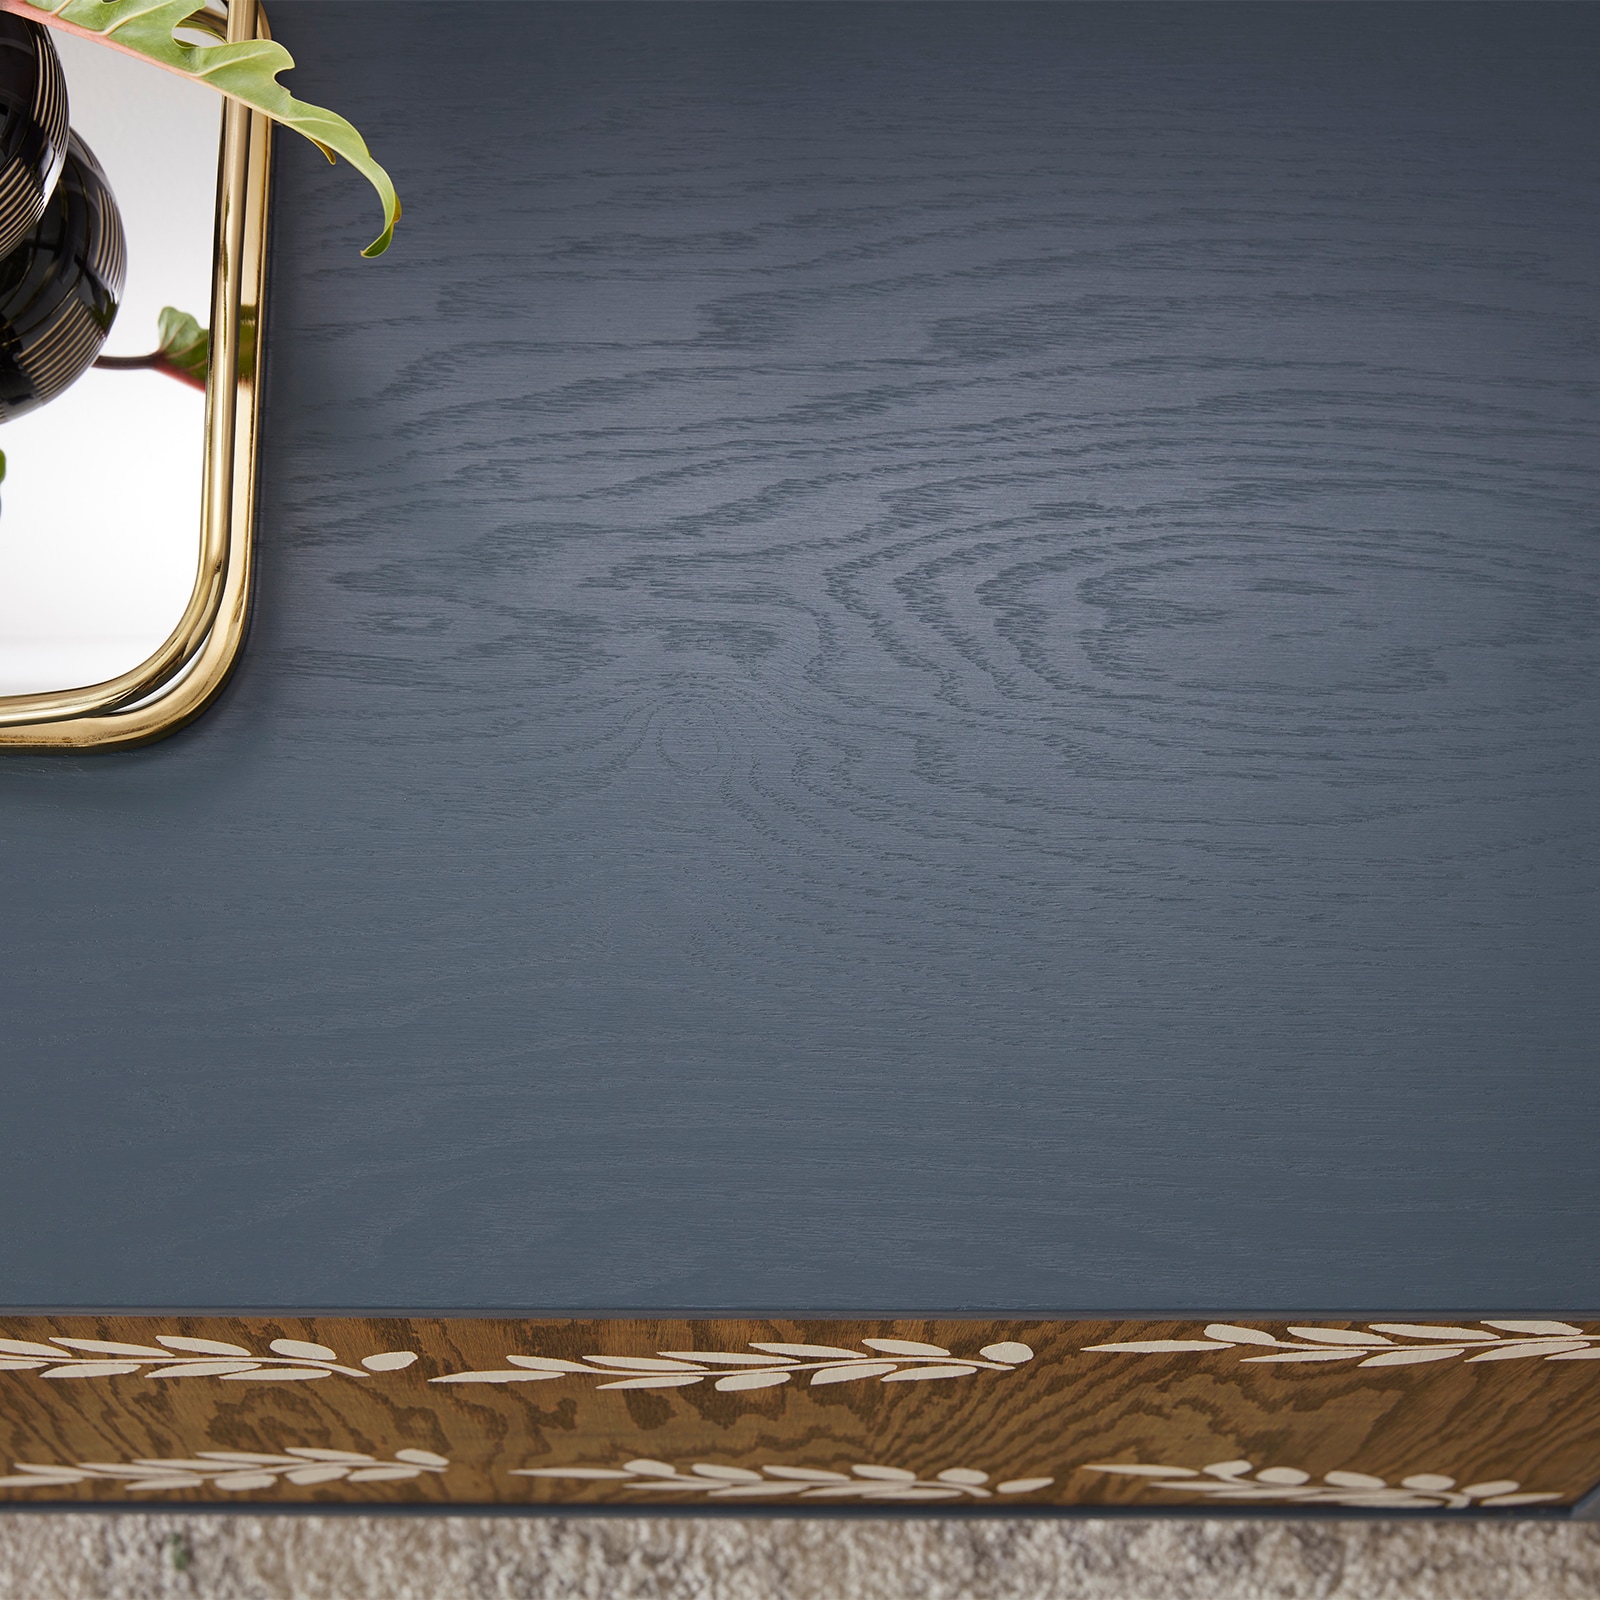 Minwax Wood Finish Water-Based True Black Semi-Transparent Interior Stain (1-quart) | 108500000